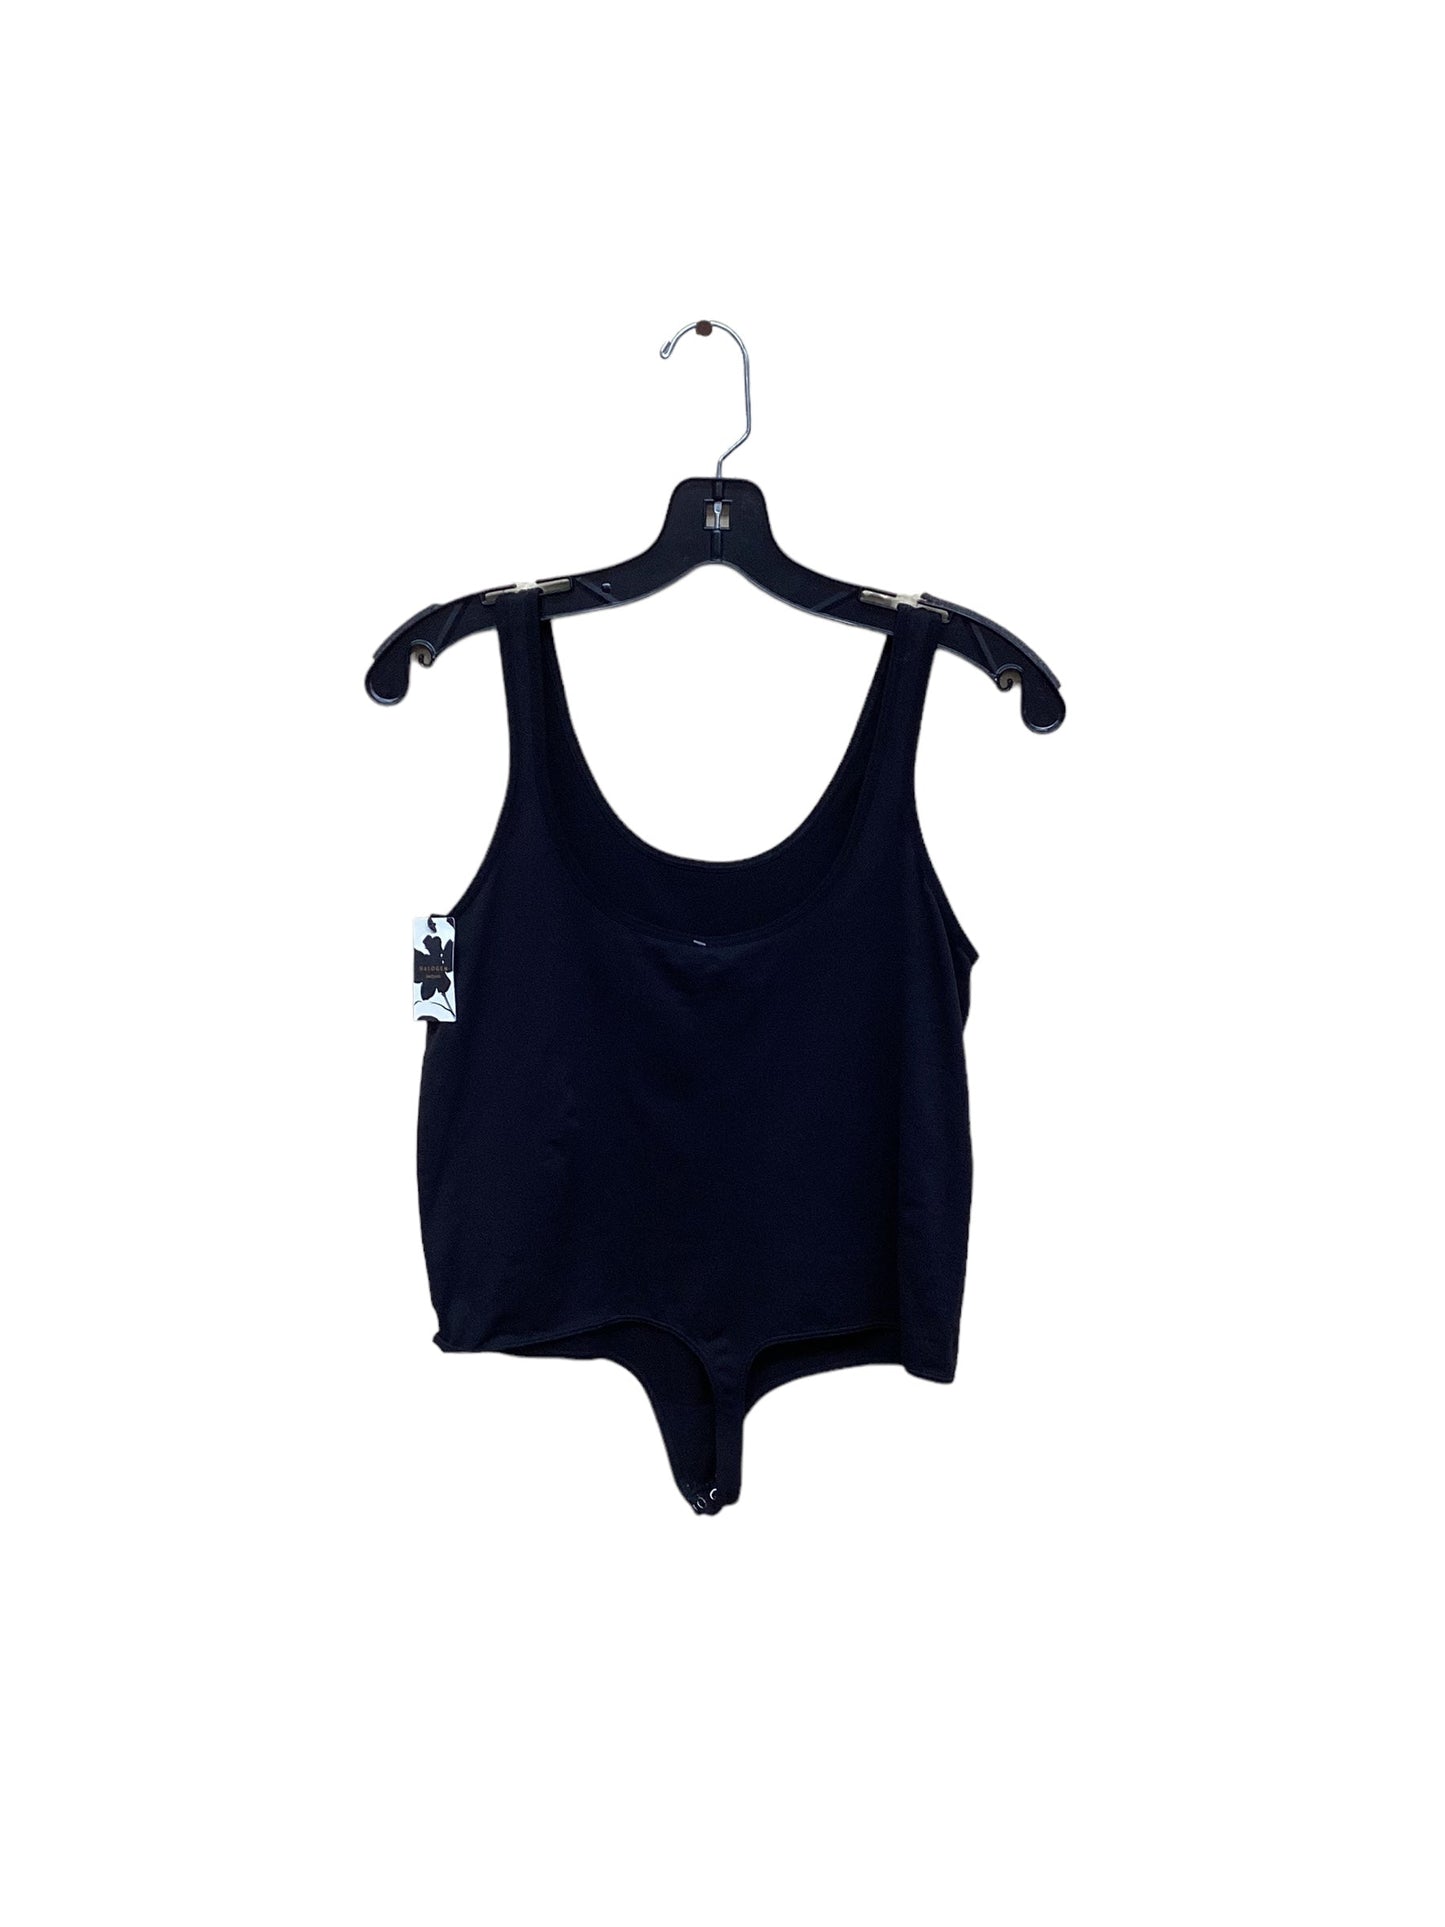 Bodysuit By Halogen  Size: Xl